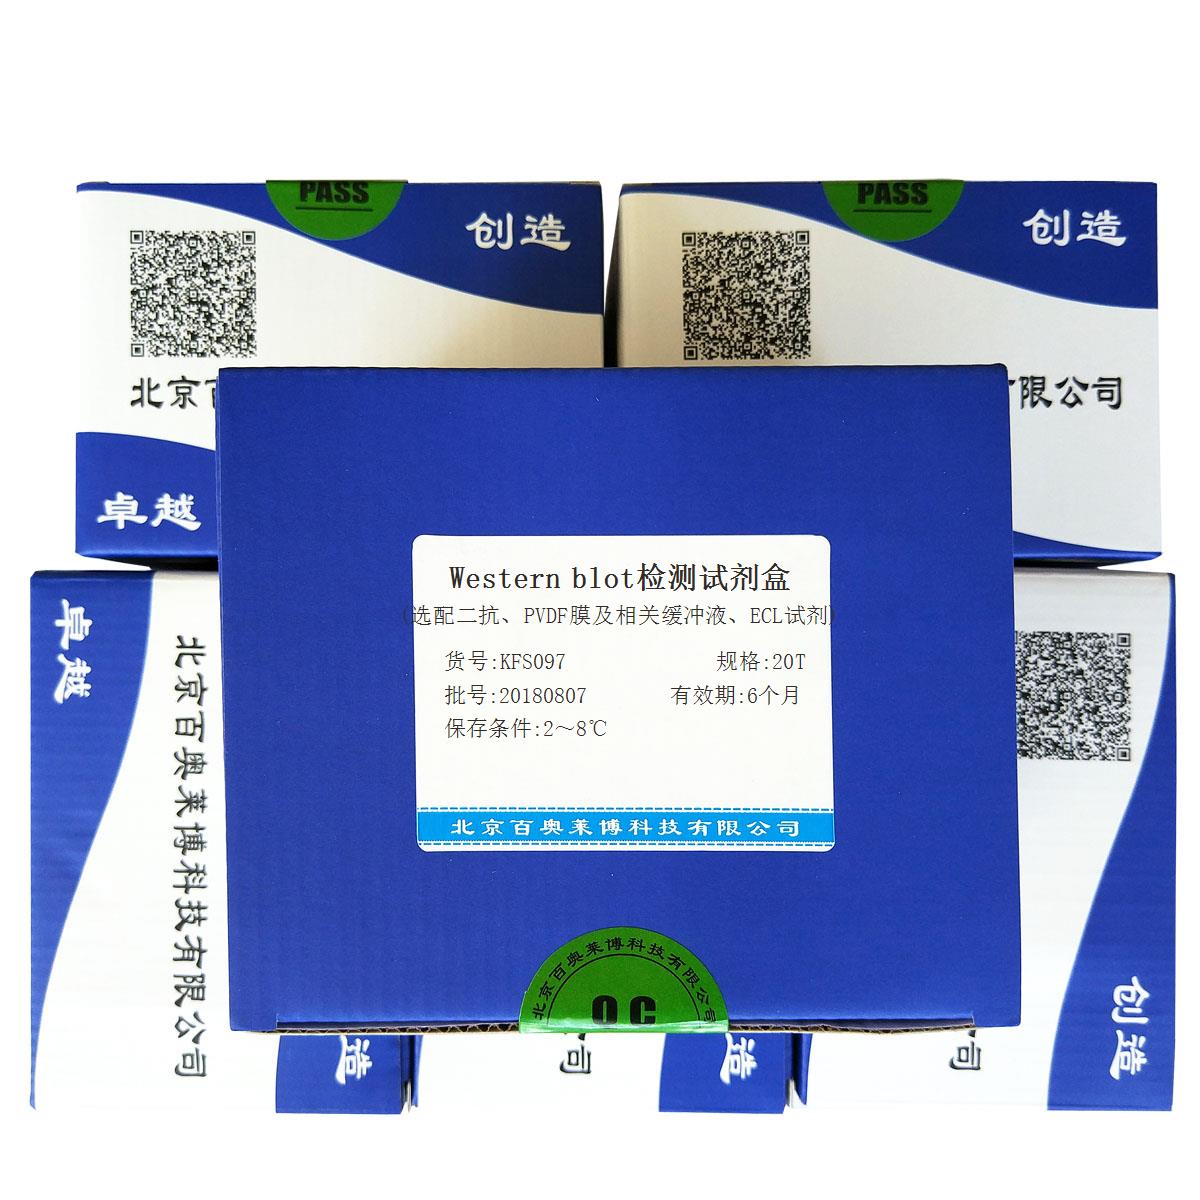 Western blot检测试剂盒(选配二抗、PVDF膜及相关缓冲液、ECL试剂)